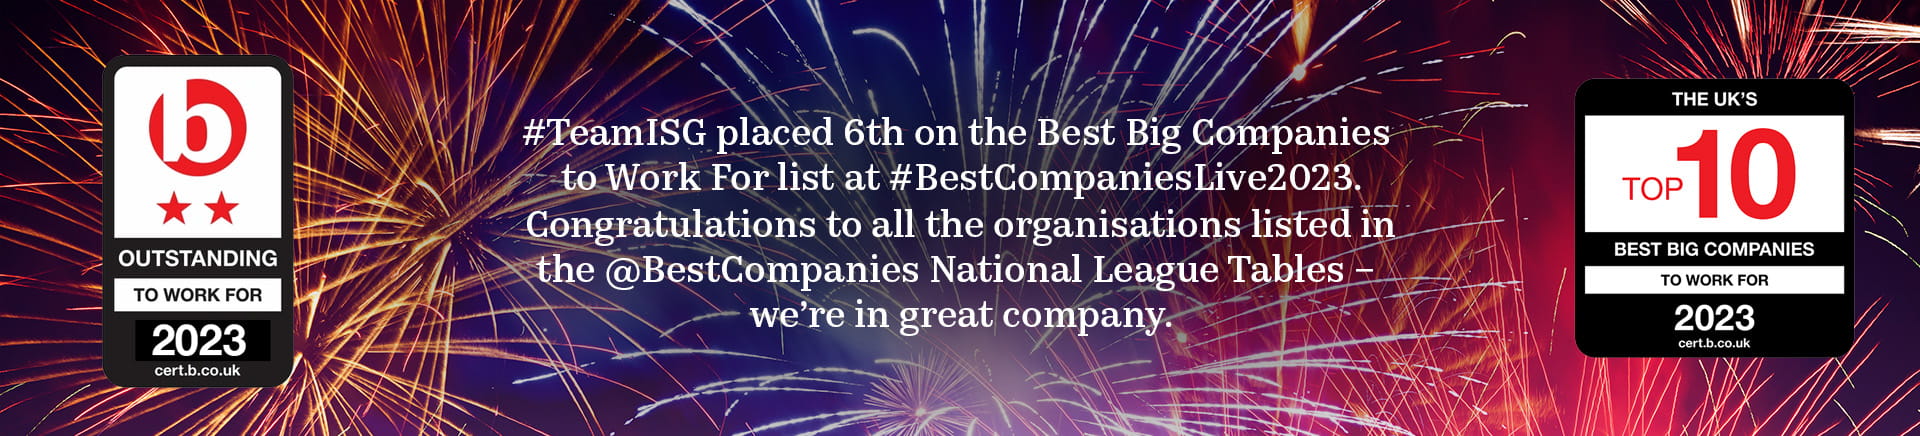 Best Big Companies - ISG